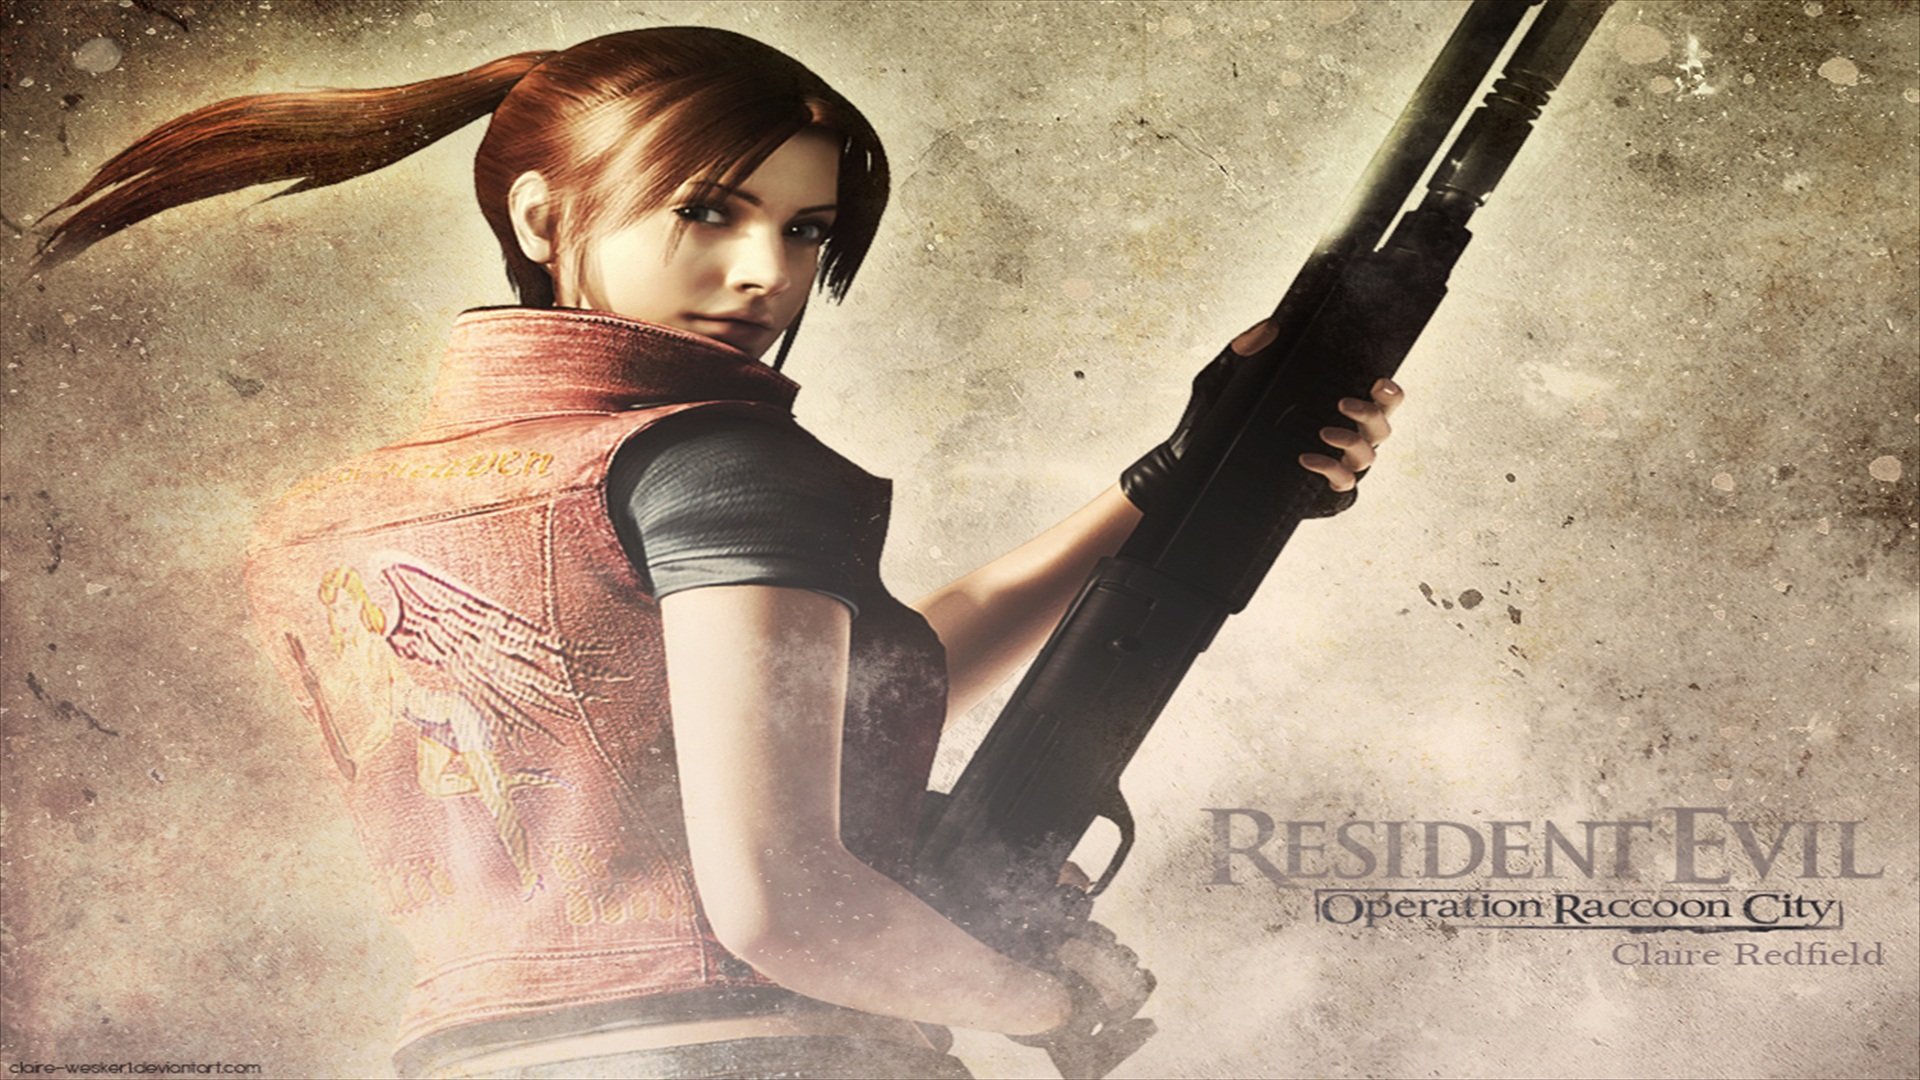 Download full hd Resident Evil desktop background ID:58248 for free